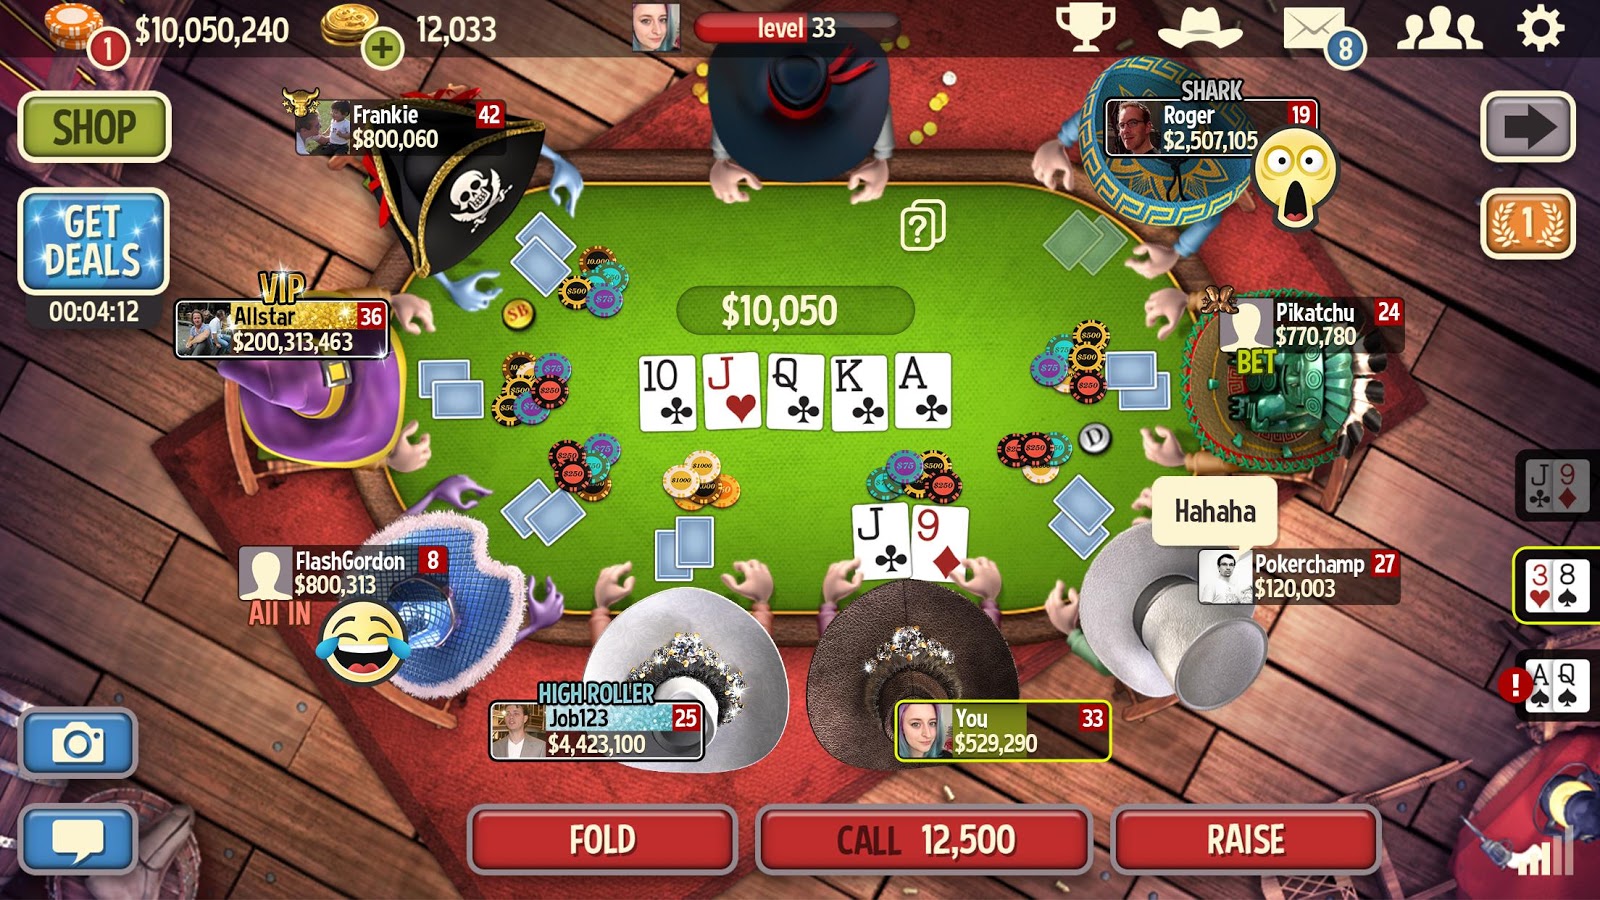 Poker download pc - 28327